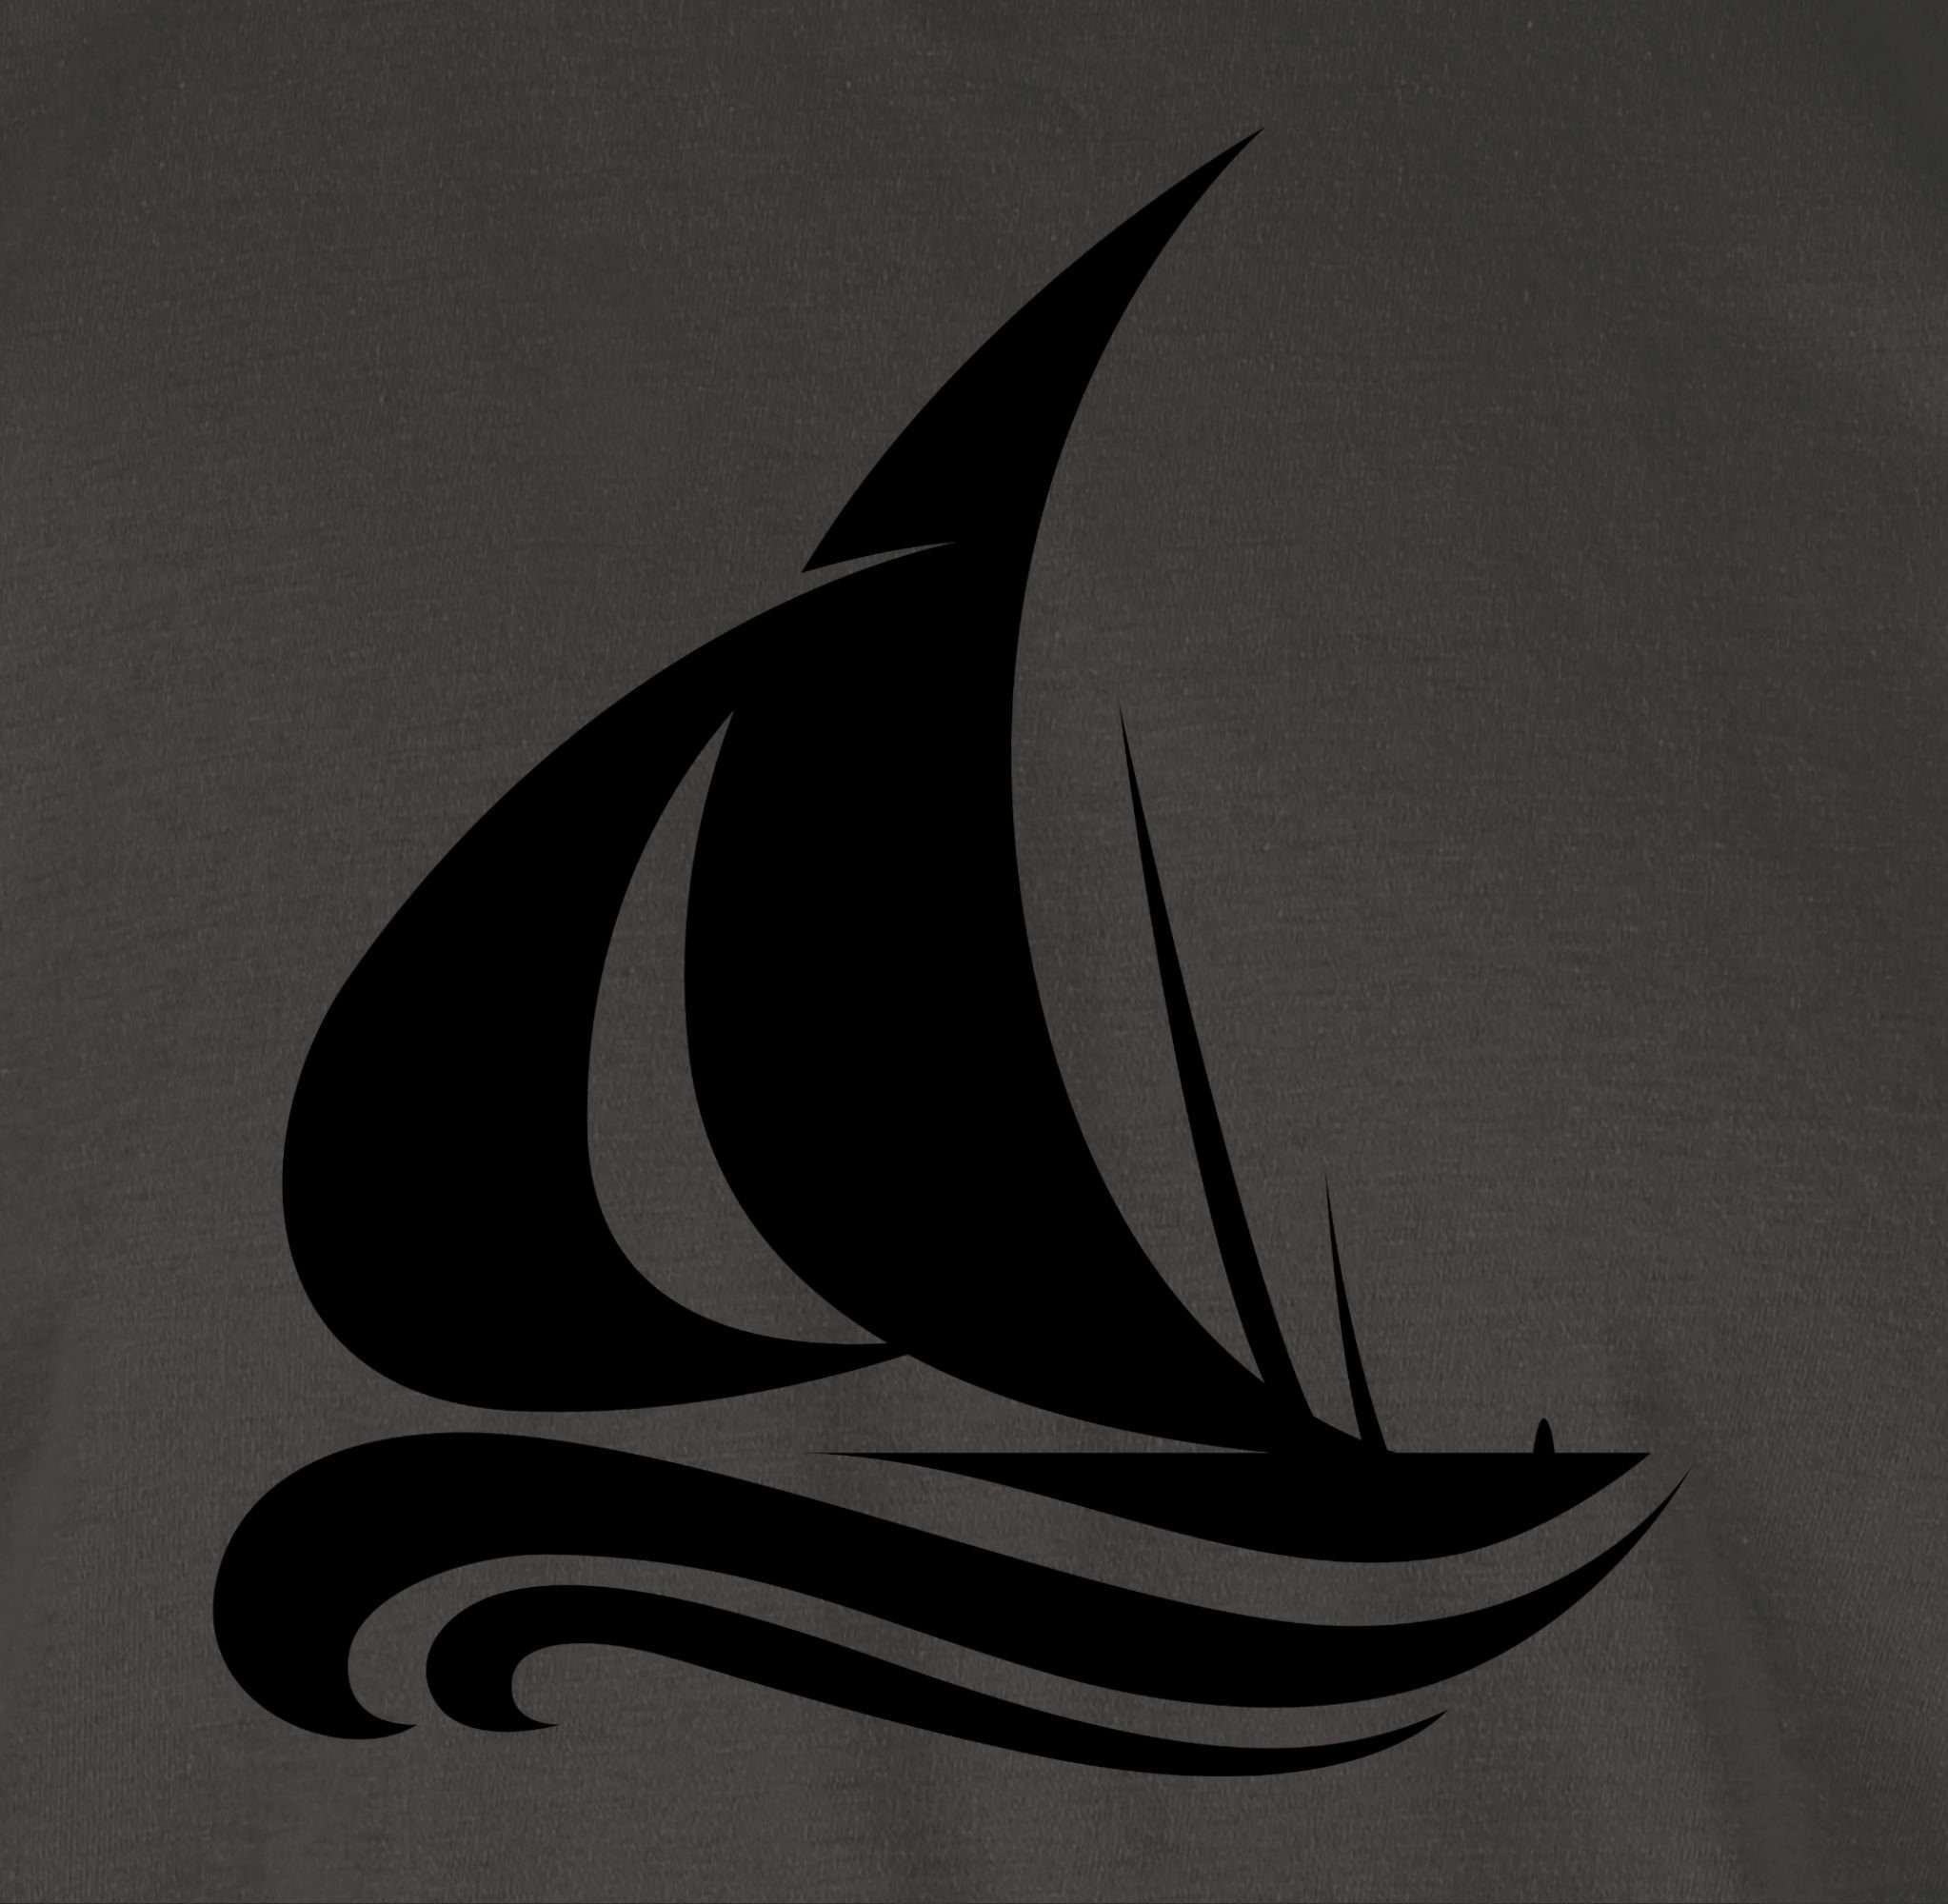 Shirtracer 1 Deko Segelboot Dunkelgrau Schiff Boot Wellen T-Shirt &